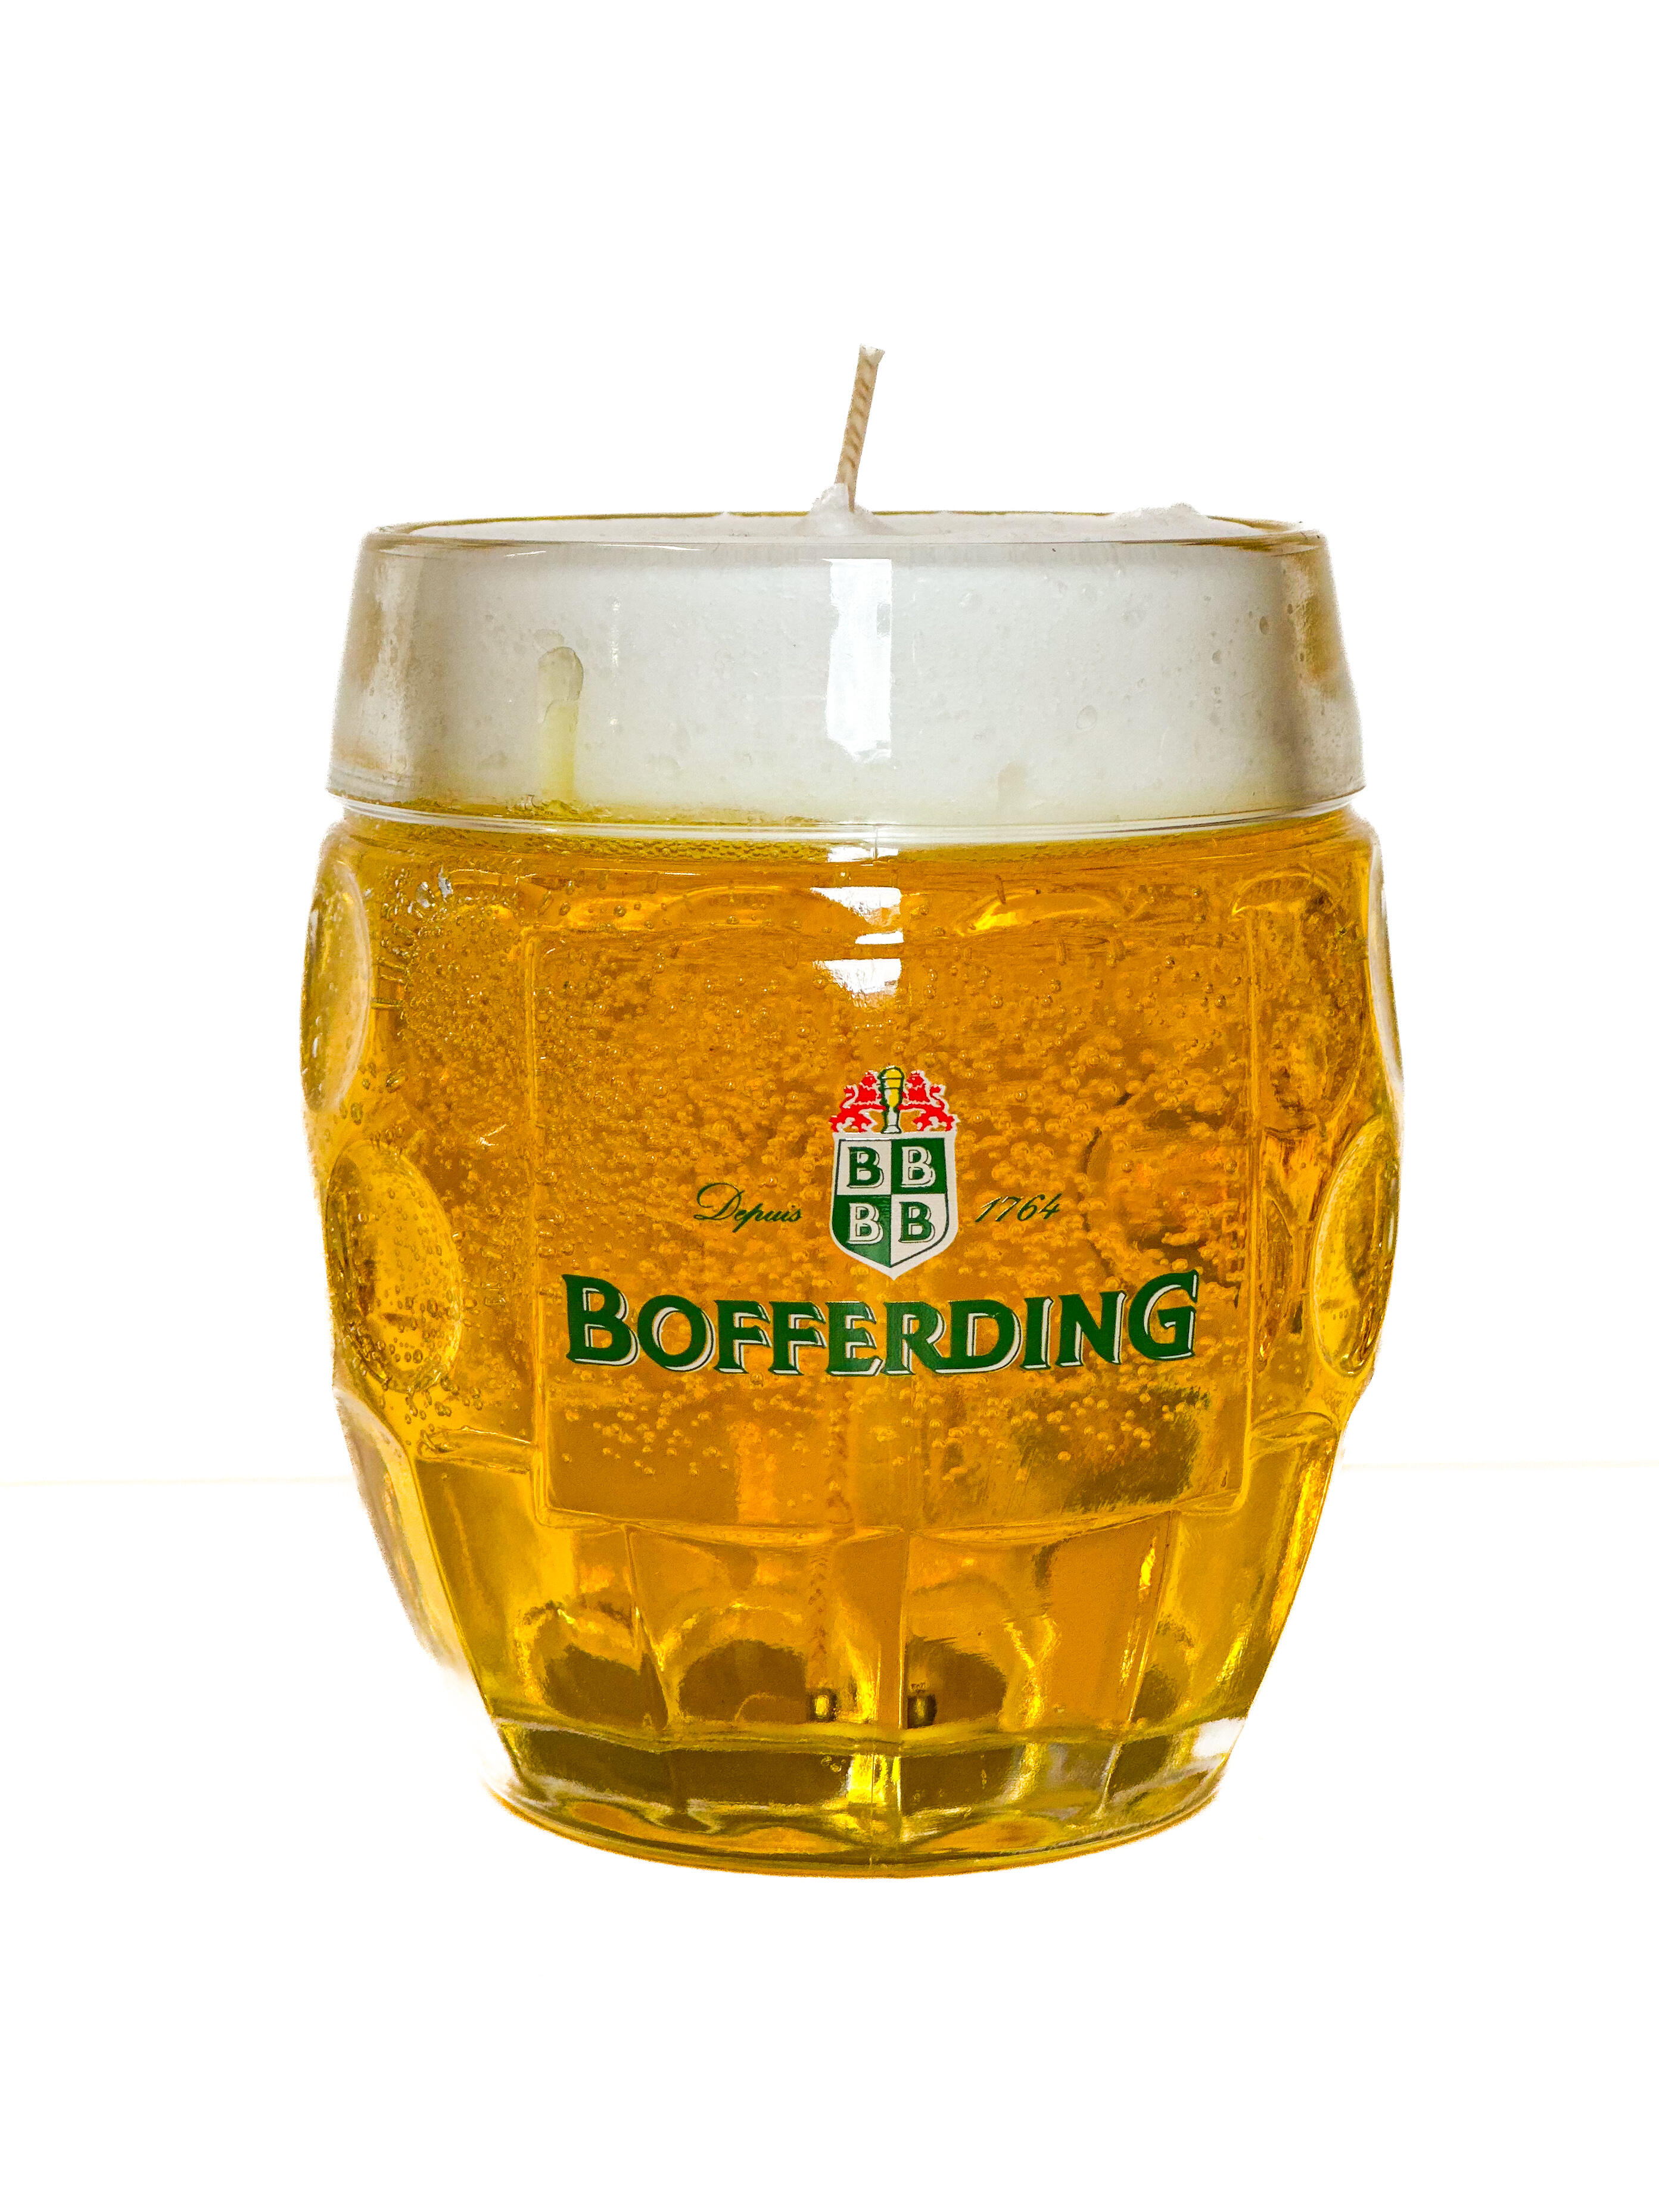 Bougie bière "Klensch" -Bofferding